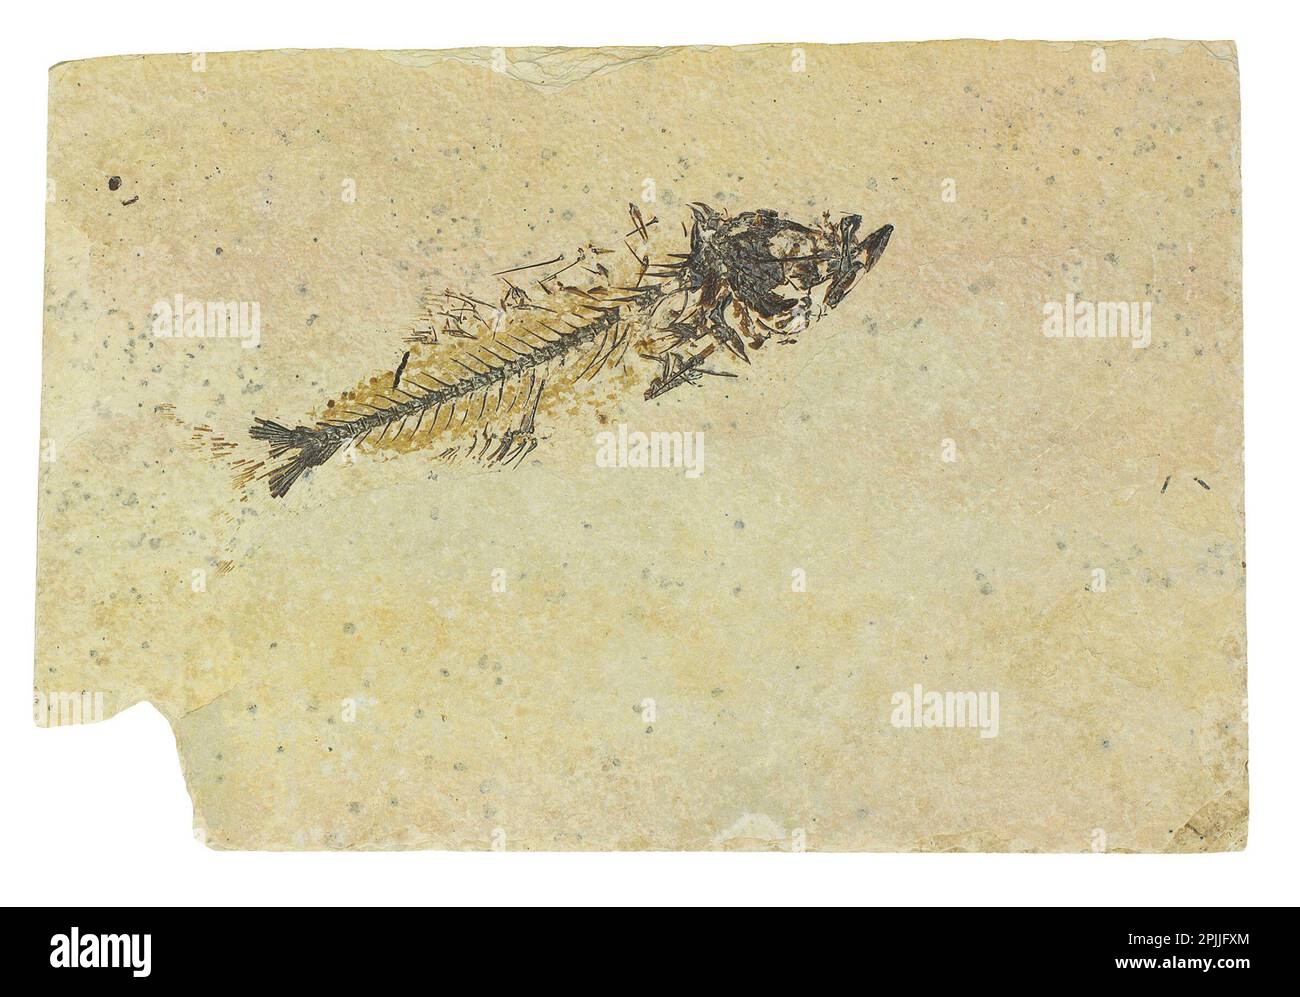 Fossilized fish, Mioplosus labracoides, fossil specimen Stock Photo